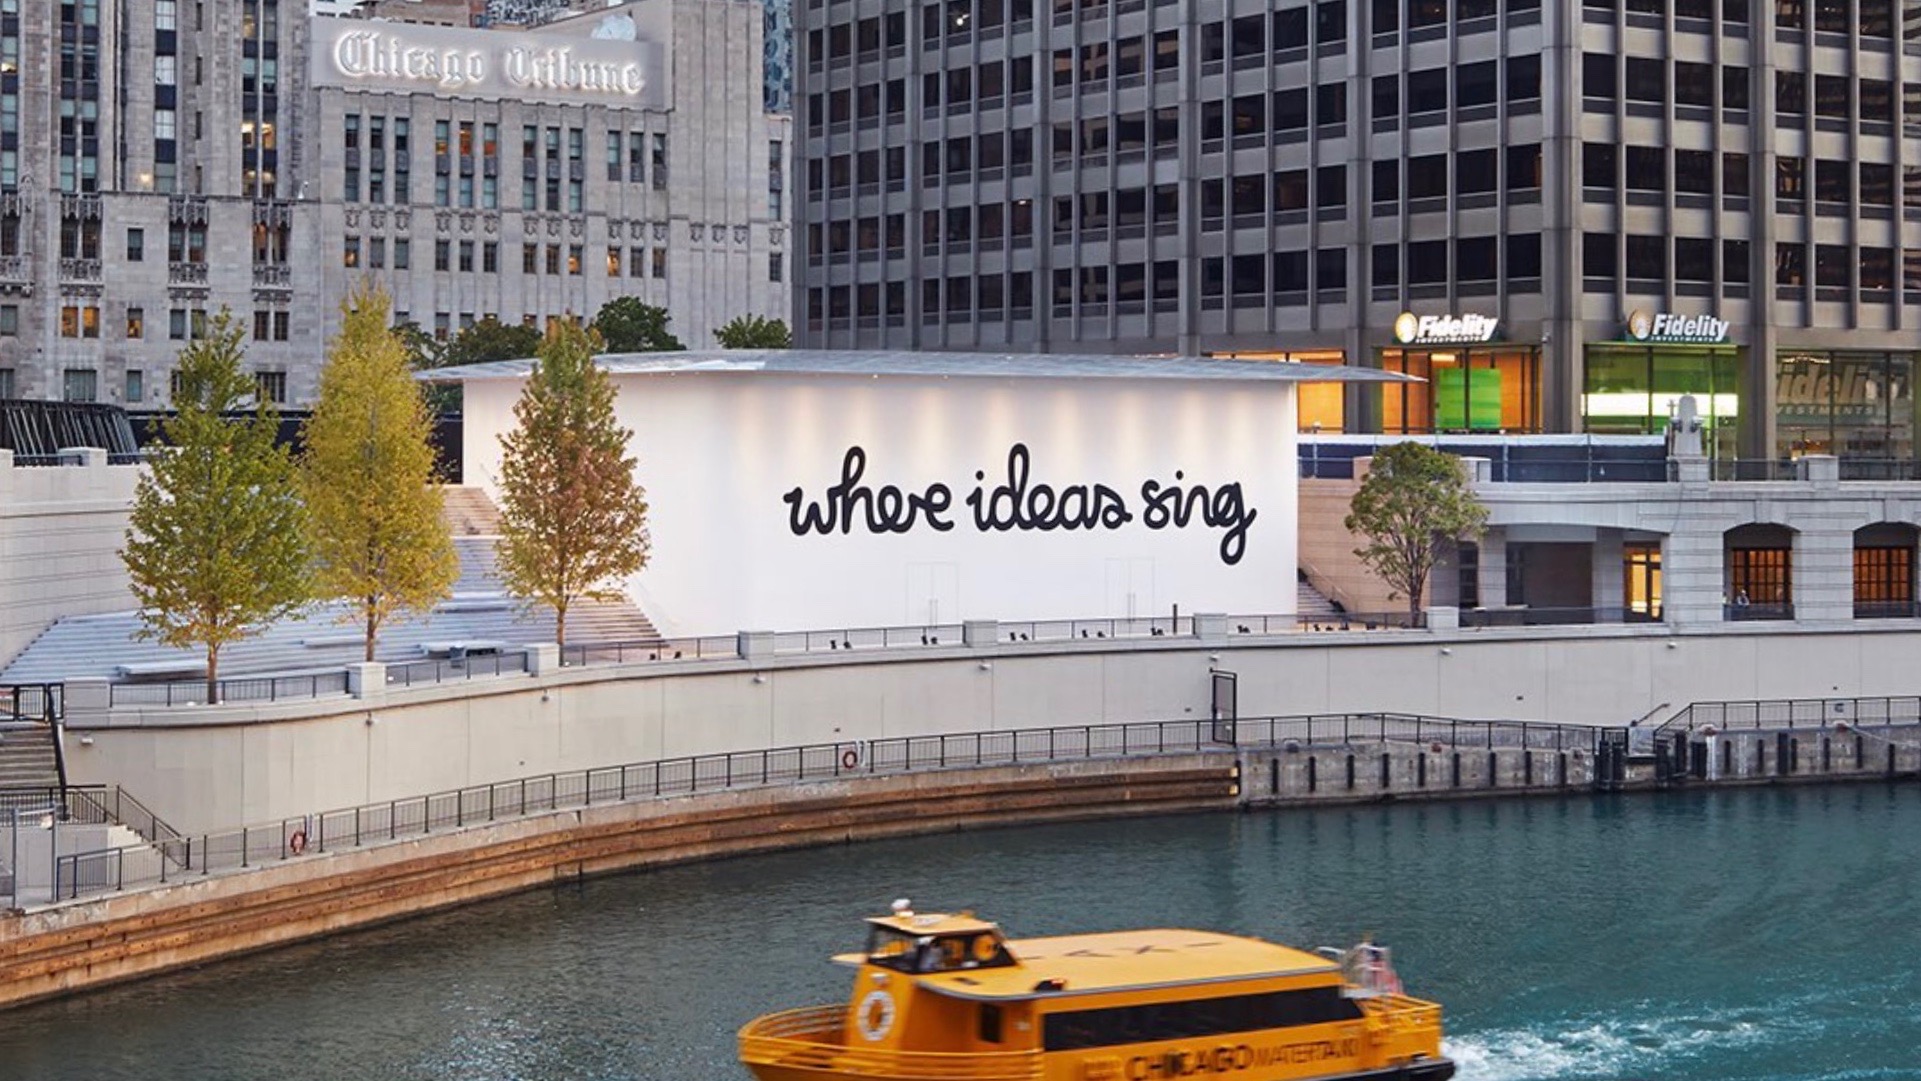 Apple Michigan Avenue opens tomorrow on Chicago's riverfront - Apple